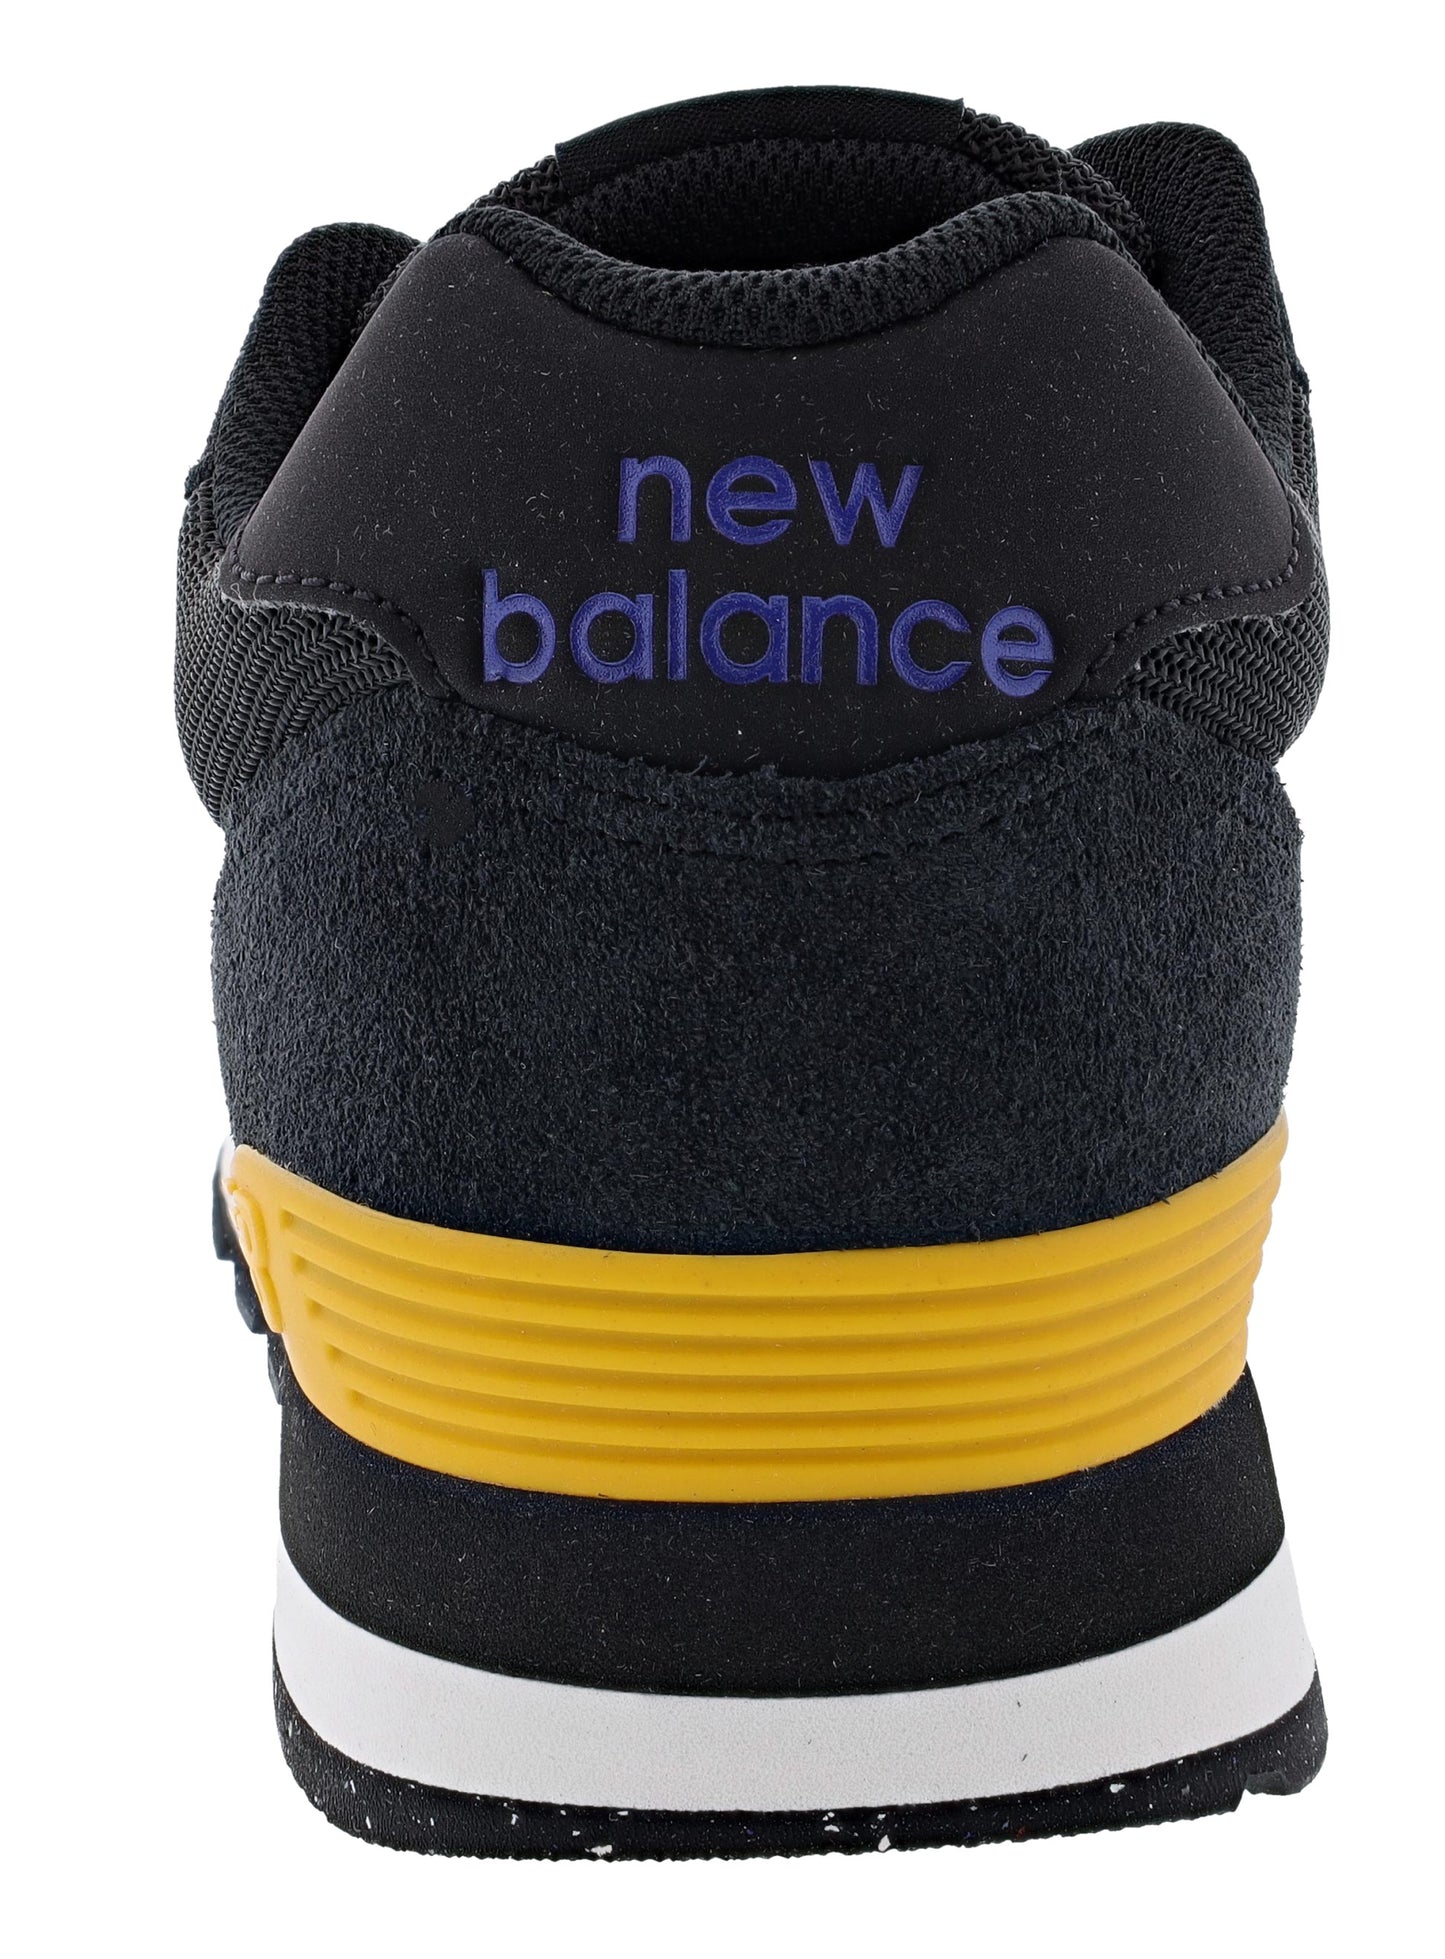 
                  
                    New Balance Men's 515 Classic Running Sneakers
                  
                